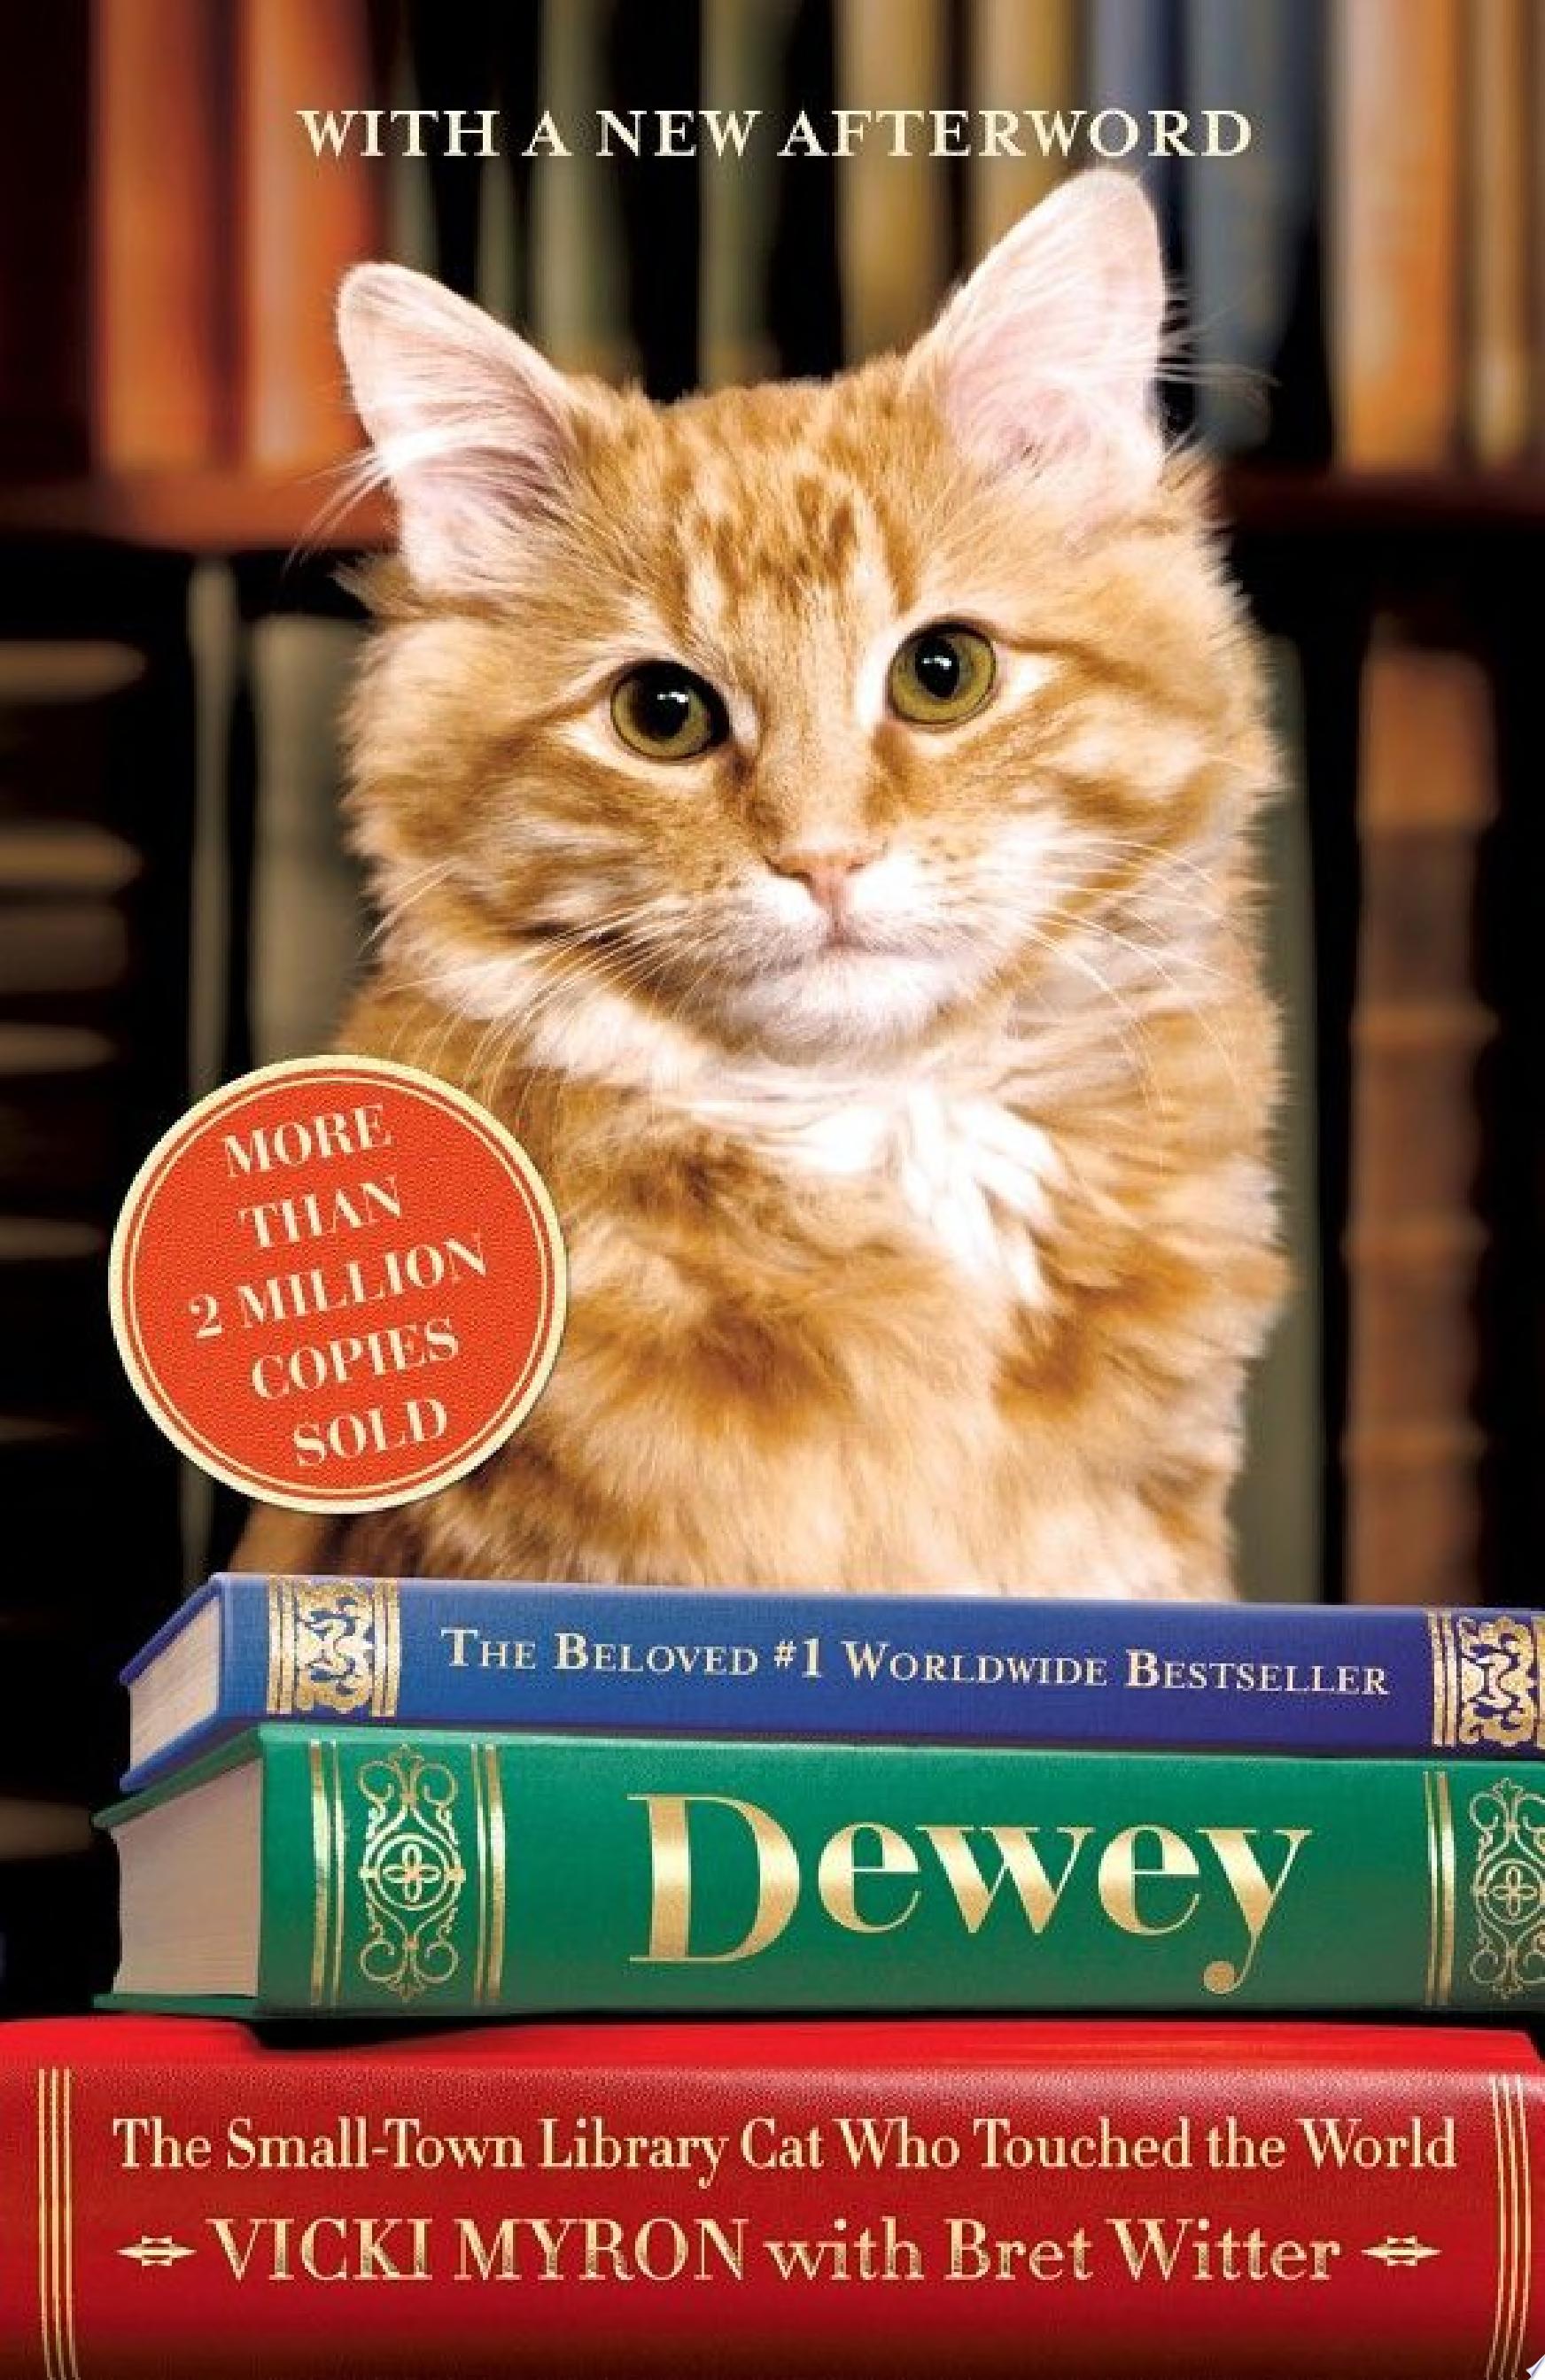 Image for "Dewey"